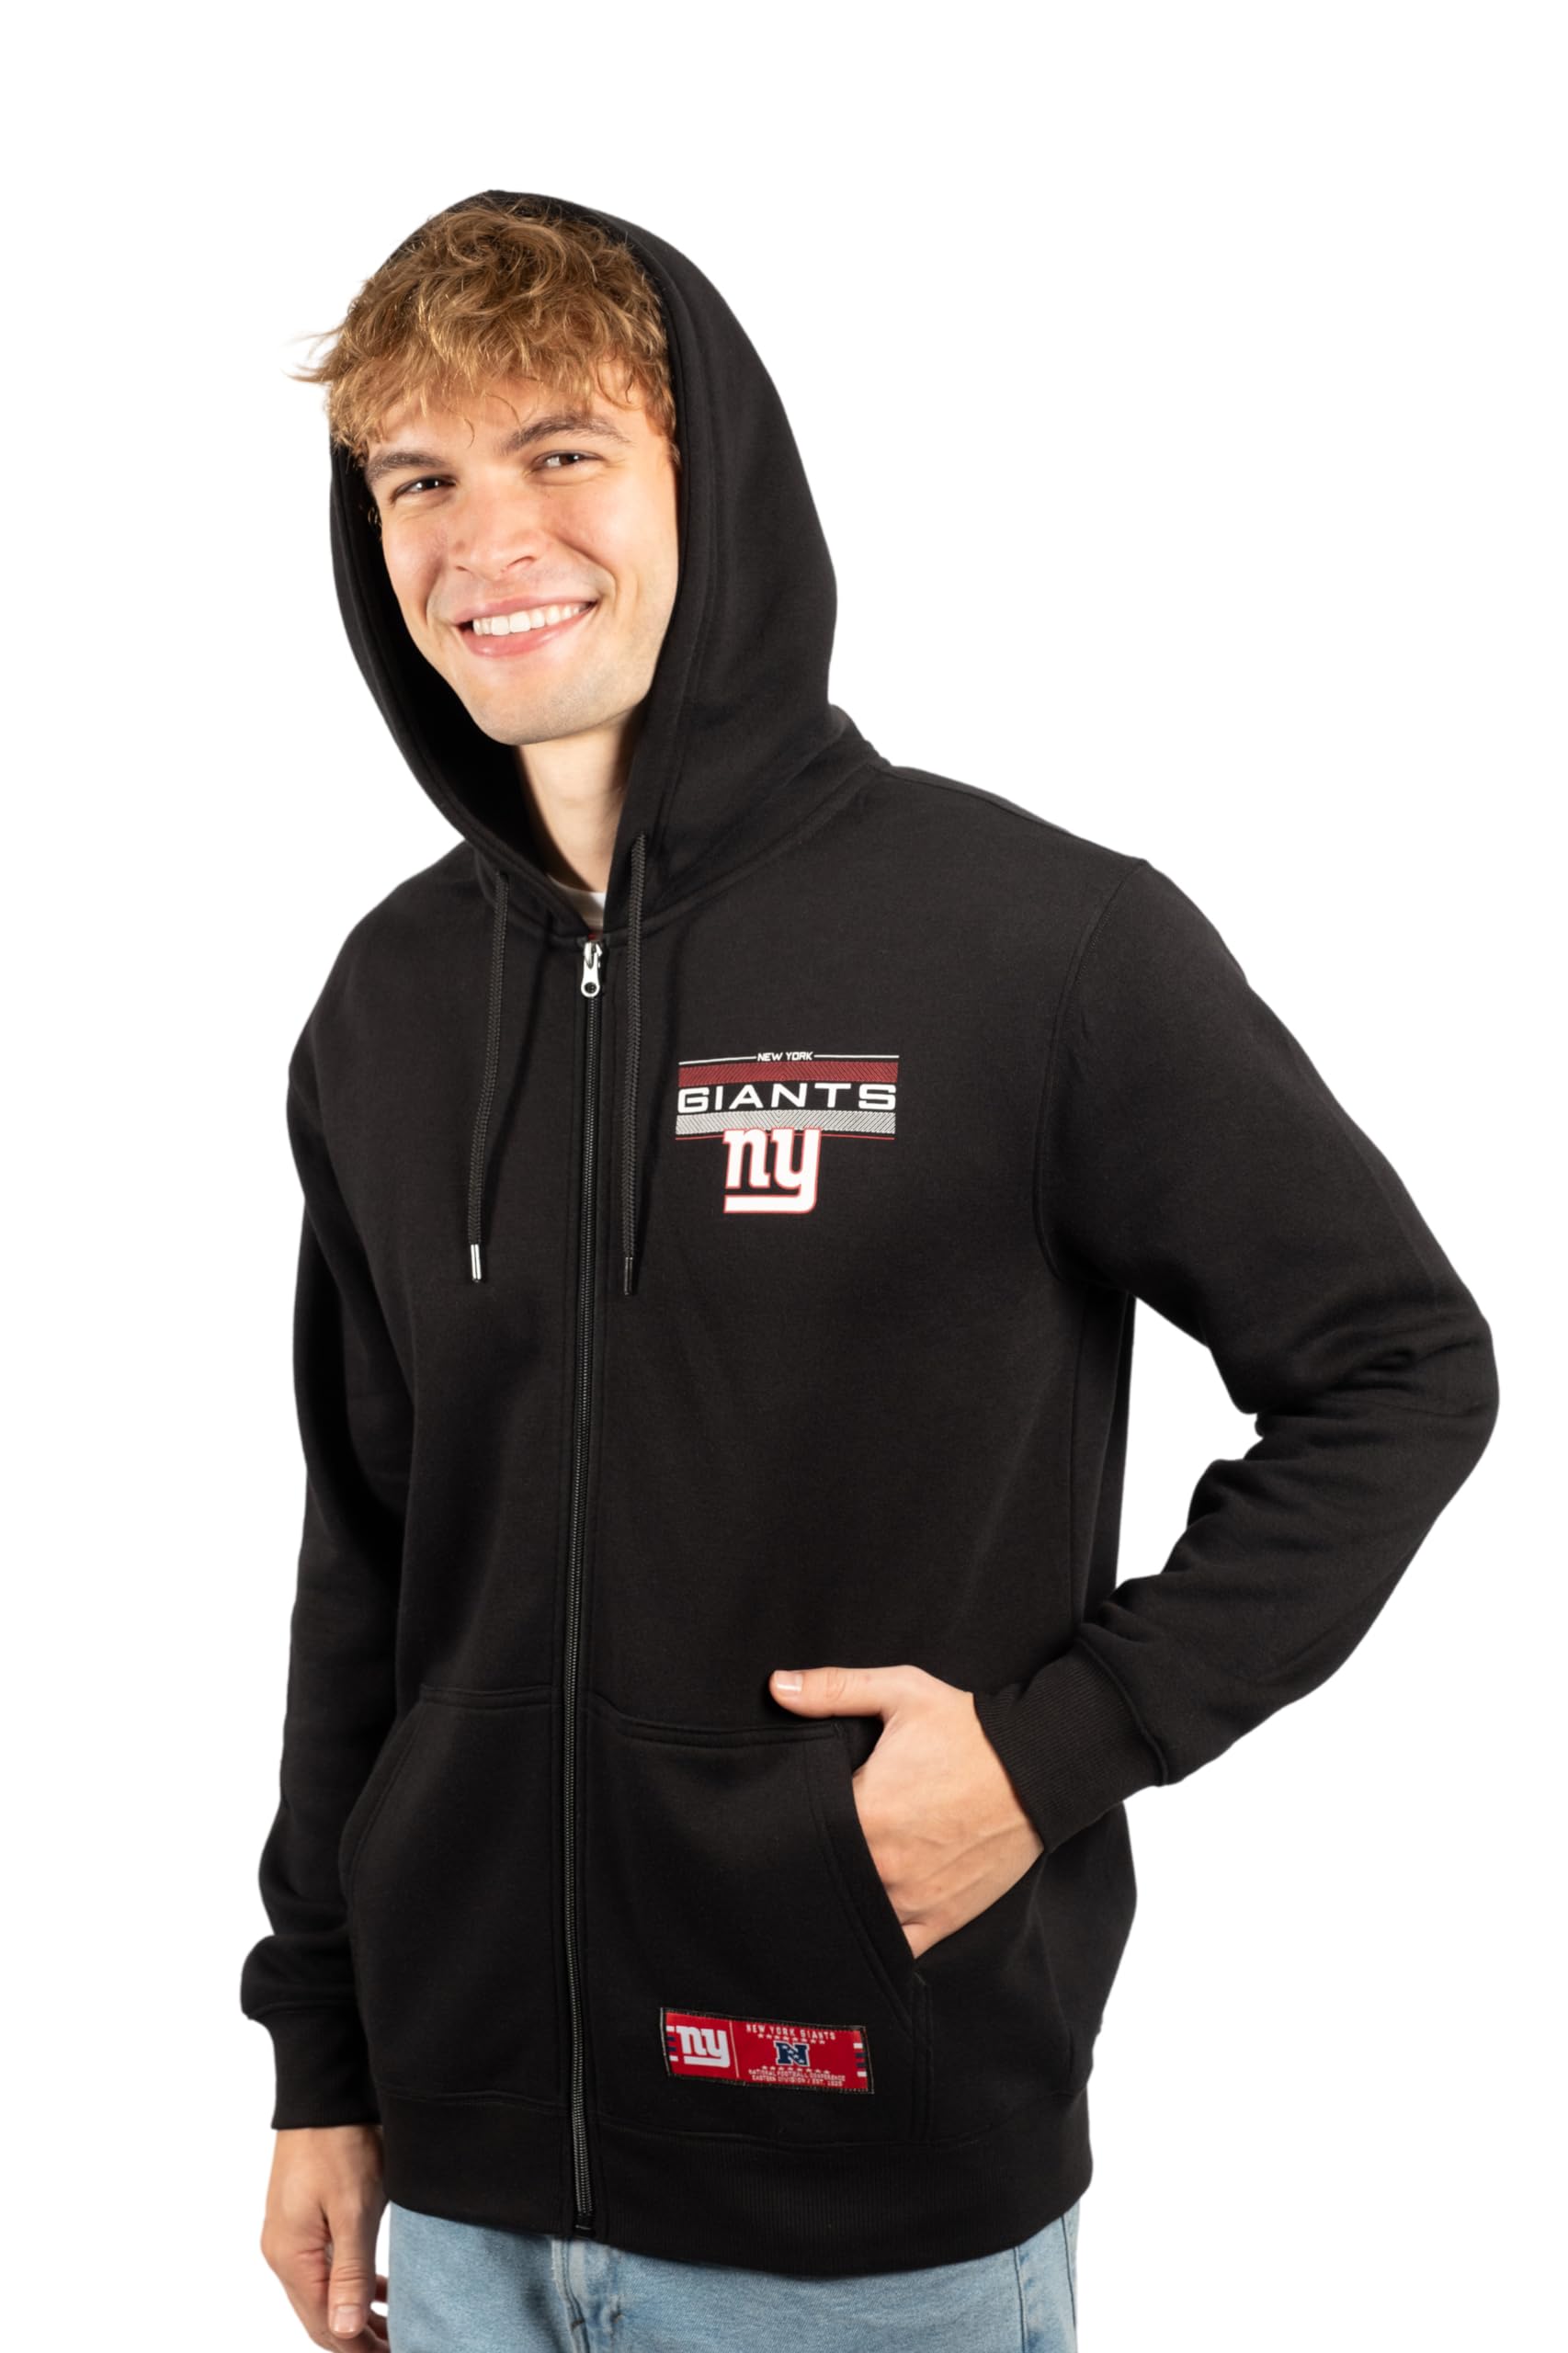 Ultra Game NFL New York Giants Mens Standard Sherpa Full Zip Cozy Fleece Hoodie Sweatshirt Jacket|New York Giants